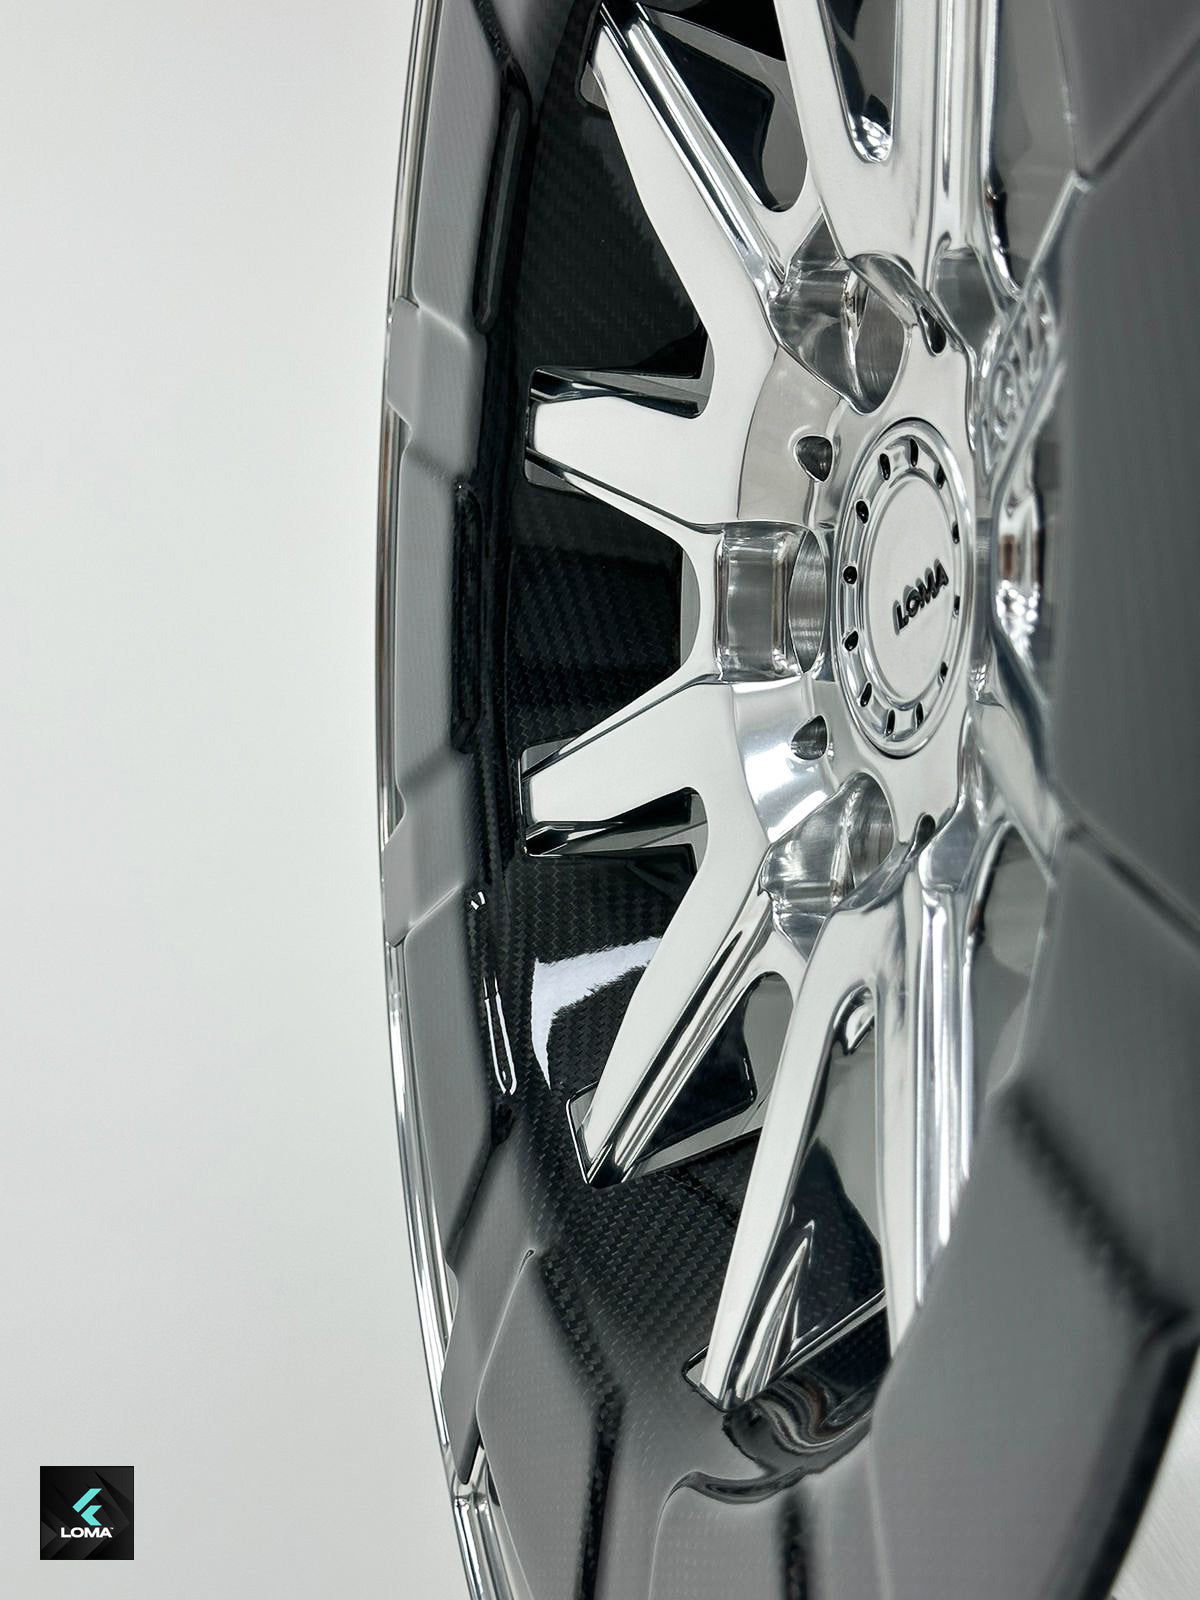 LOMA Forged CF24 F1 AERODISC wheels, a perfect match for black C8 Corvette